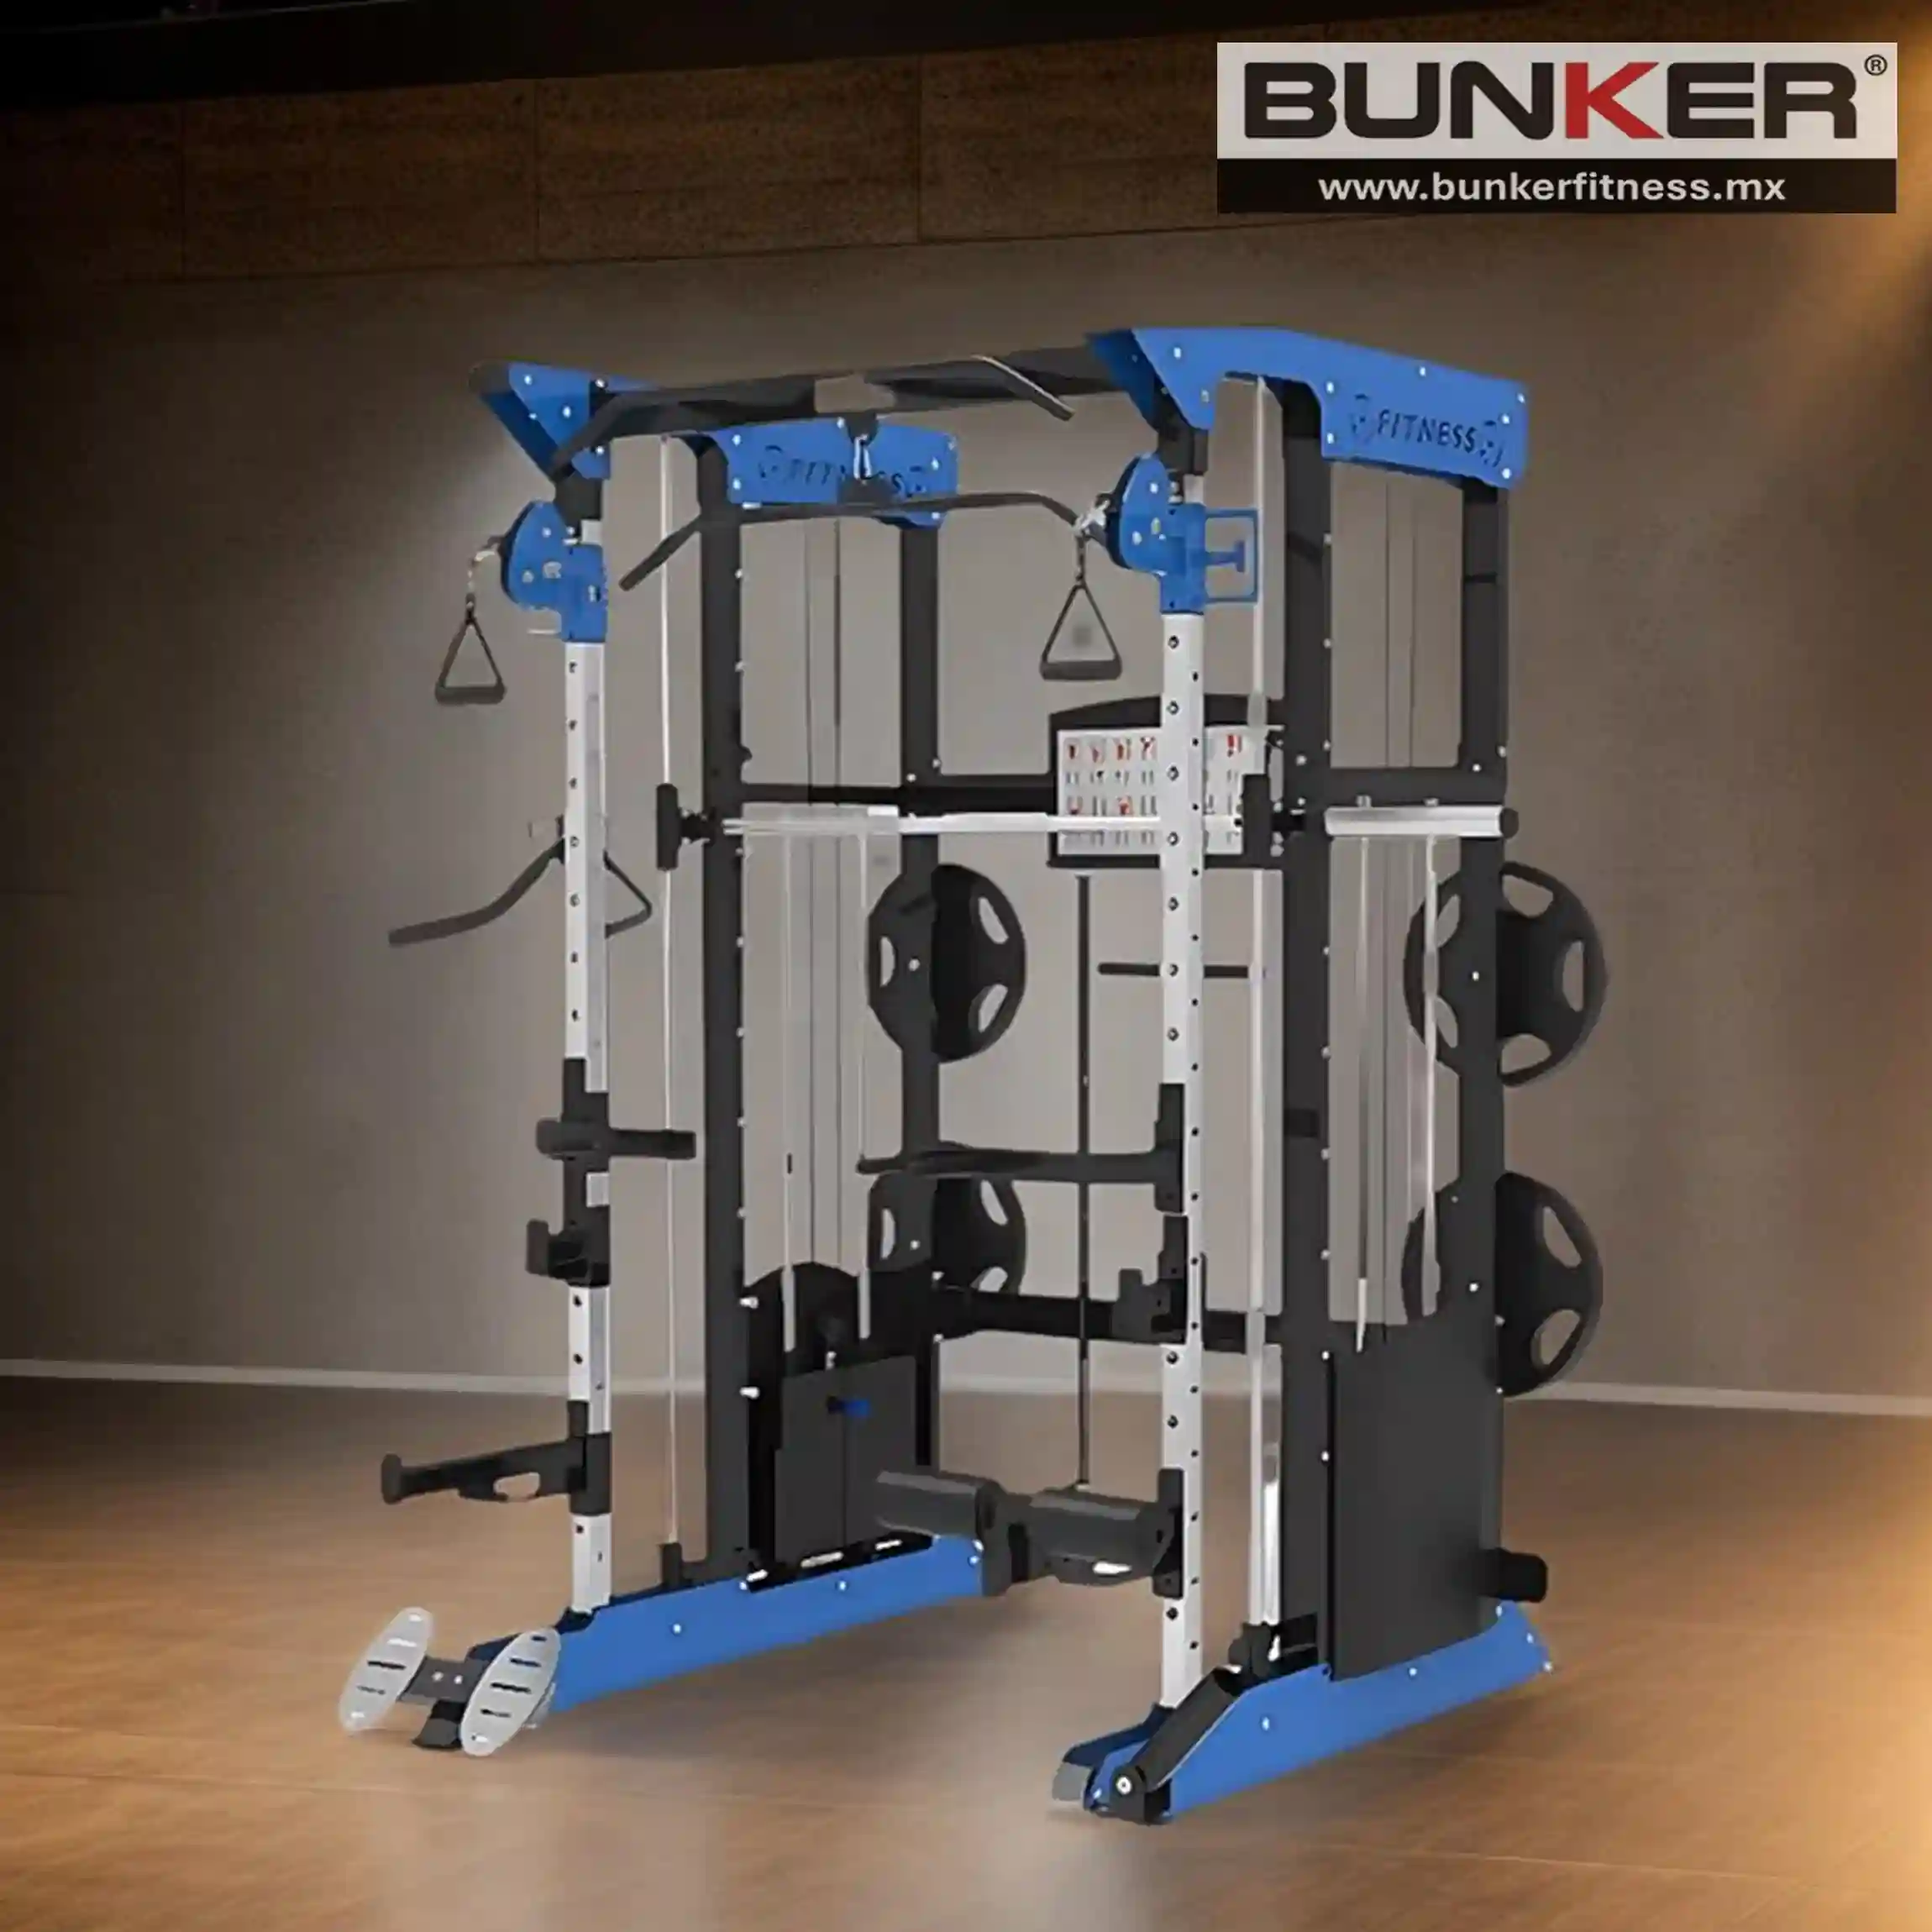 Gimnasio multifuncional titan smith machine bunker gym bunker fitness 5